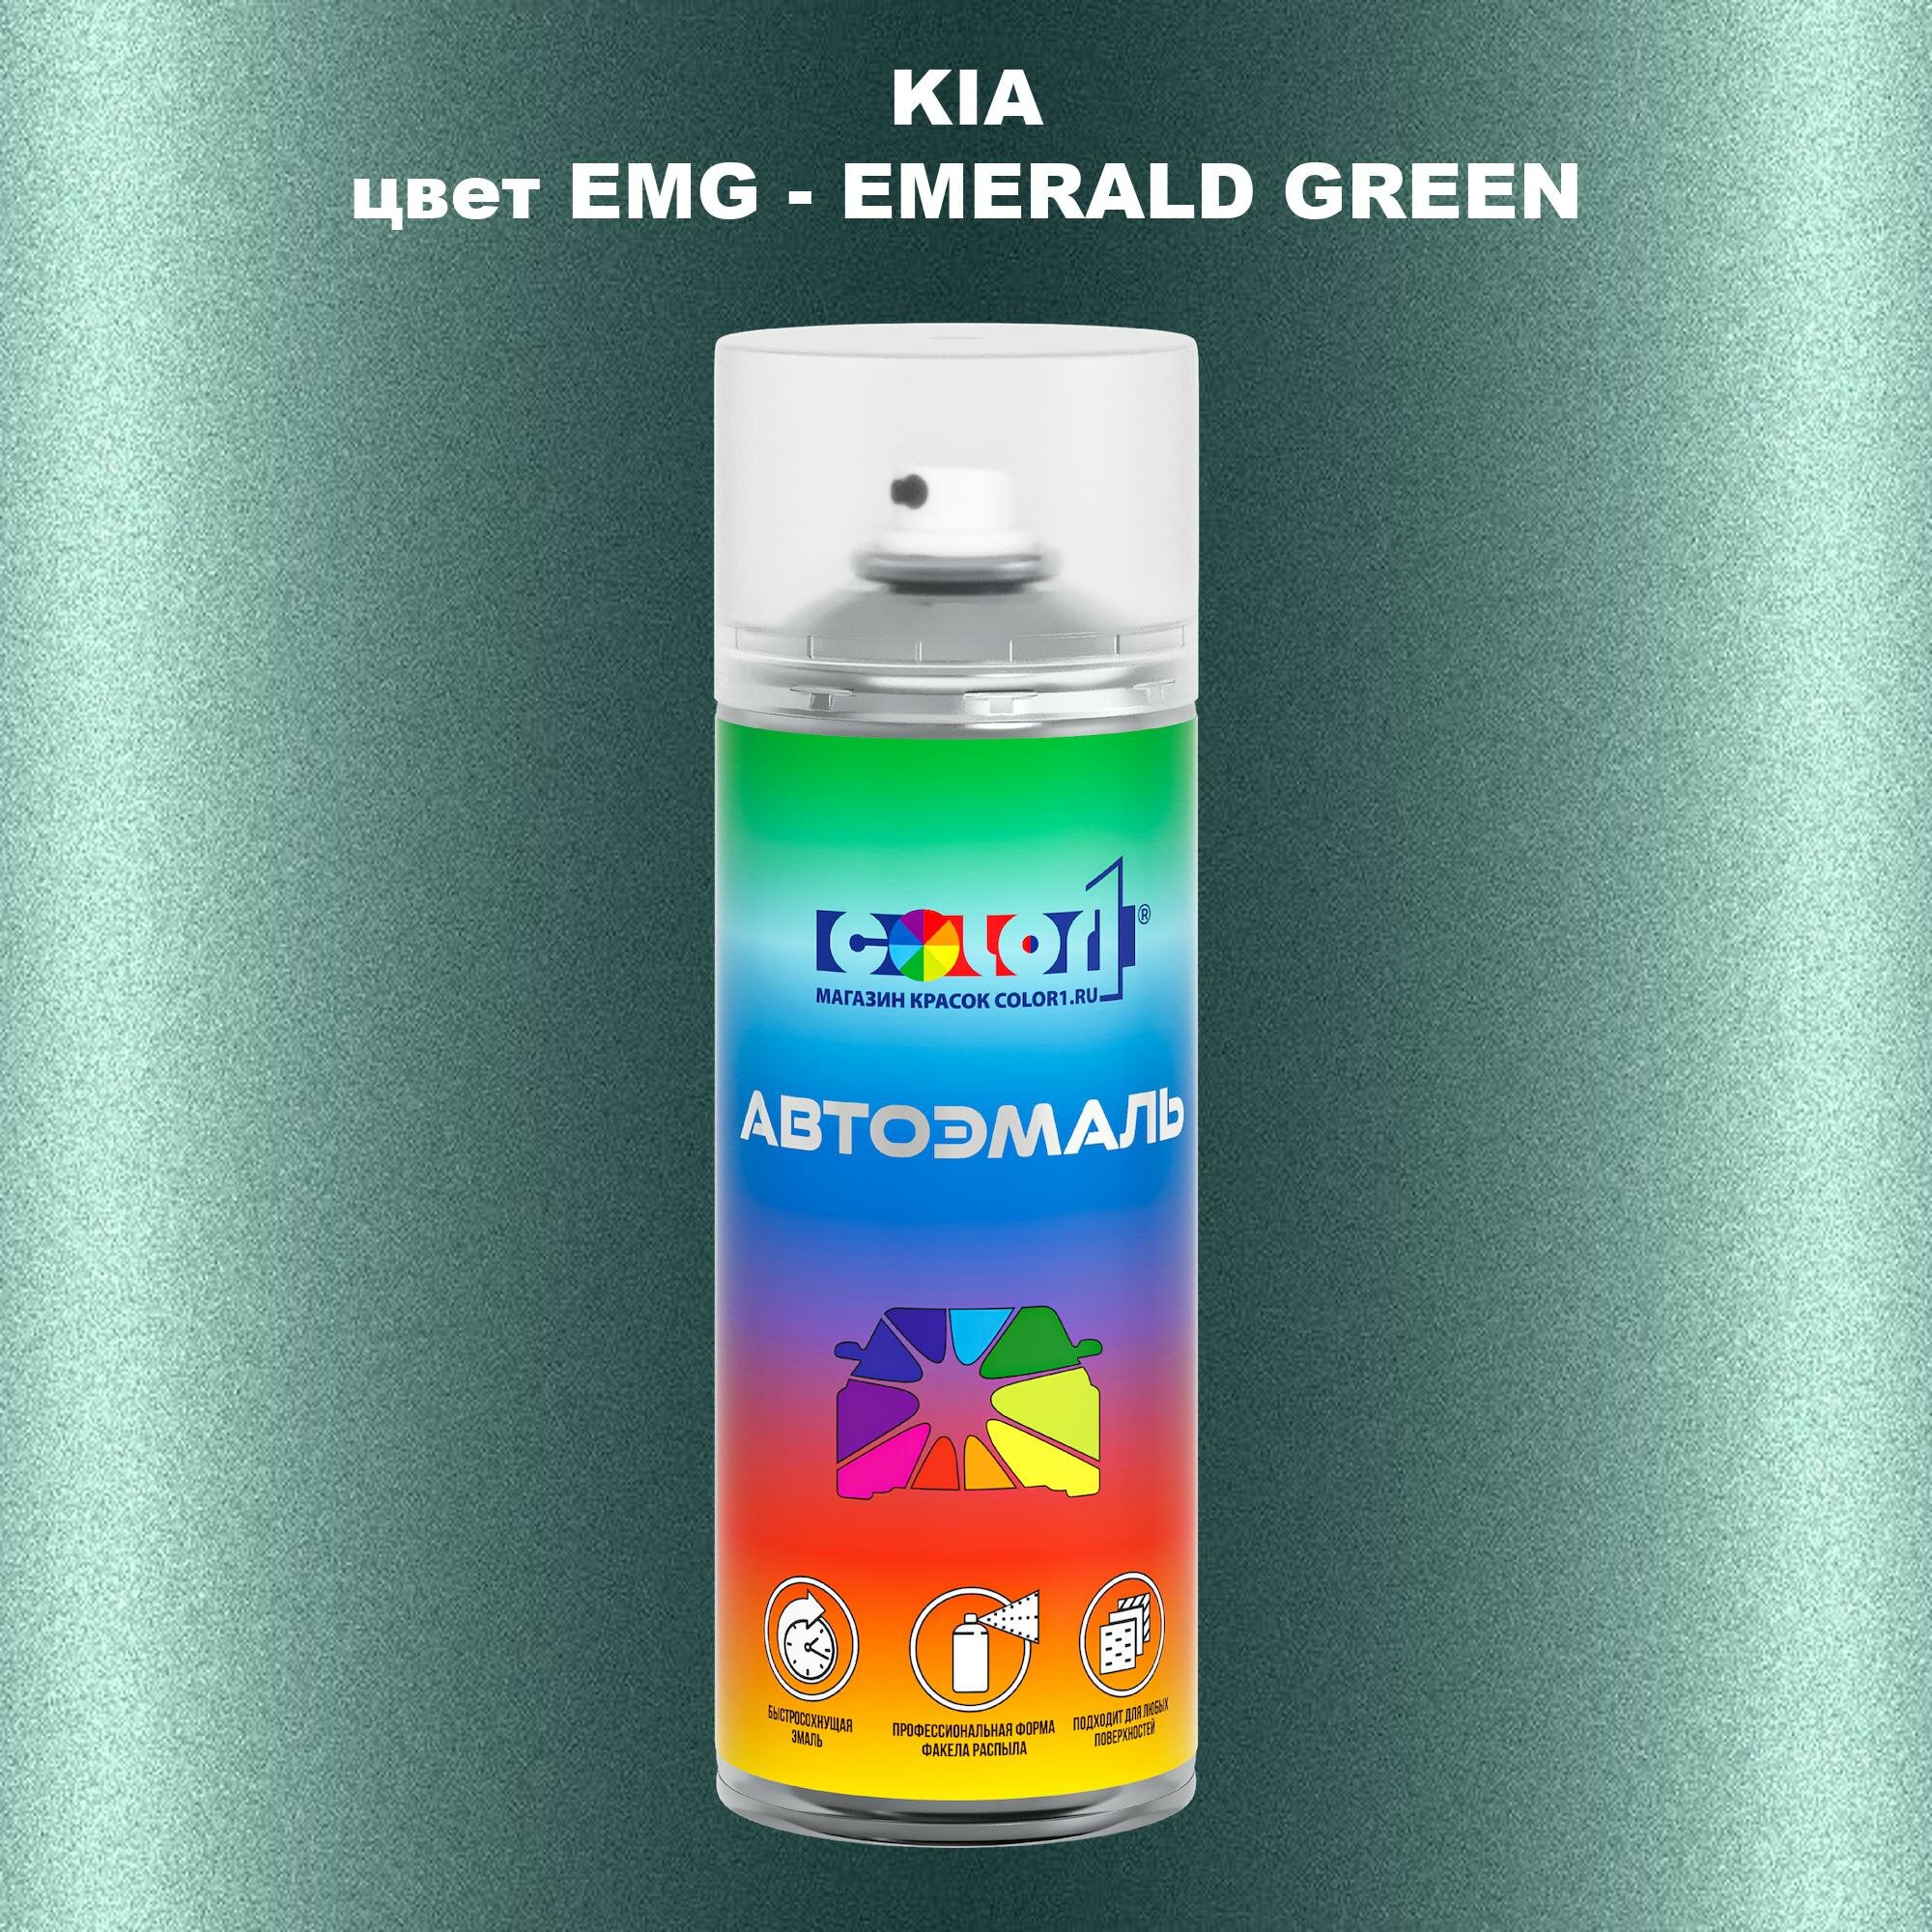 Аэрозольная краска COLOR1 для KIA цвет EMG - EMERALD GREEN